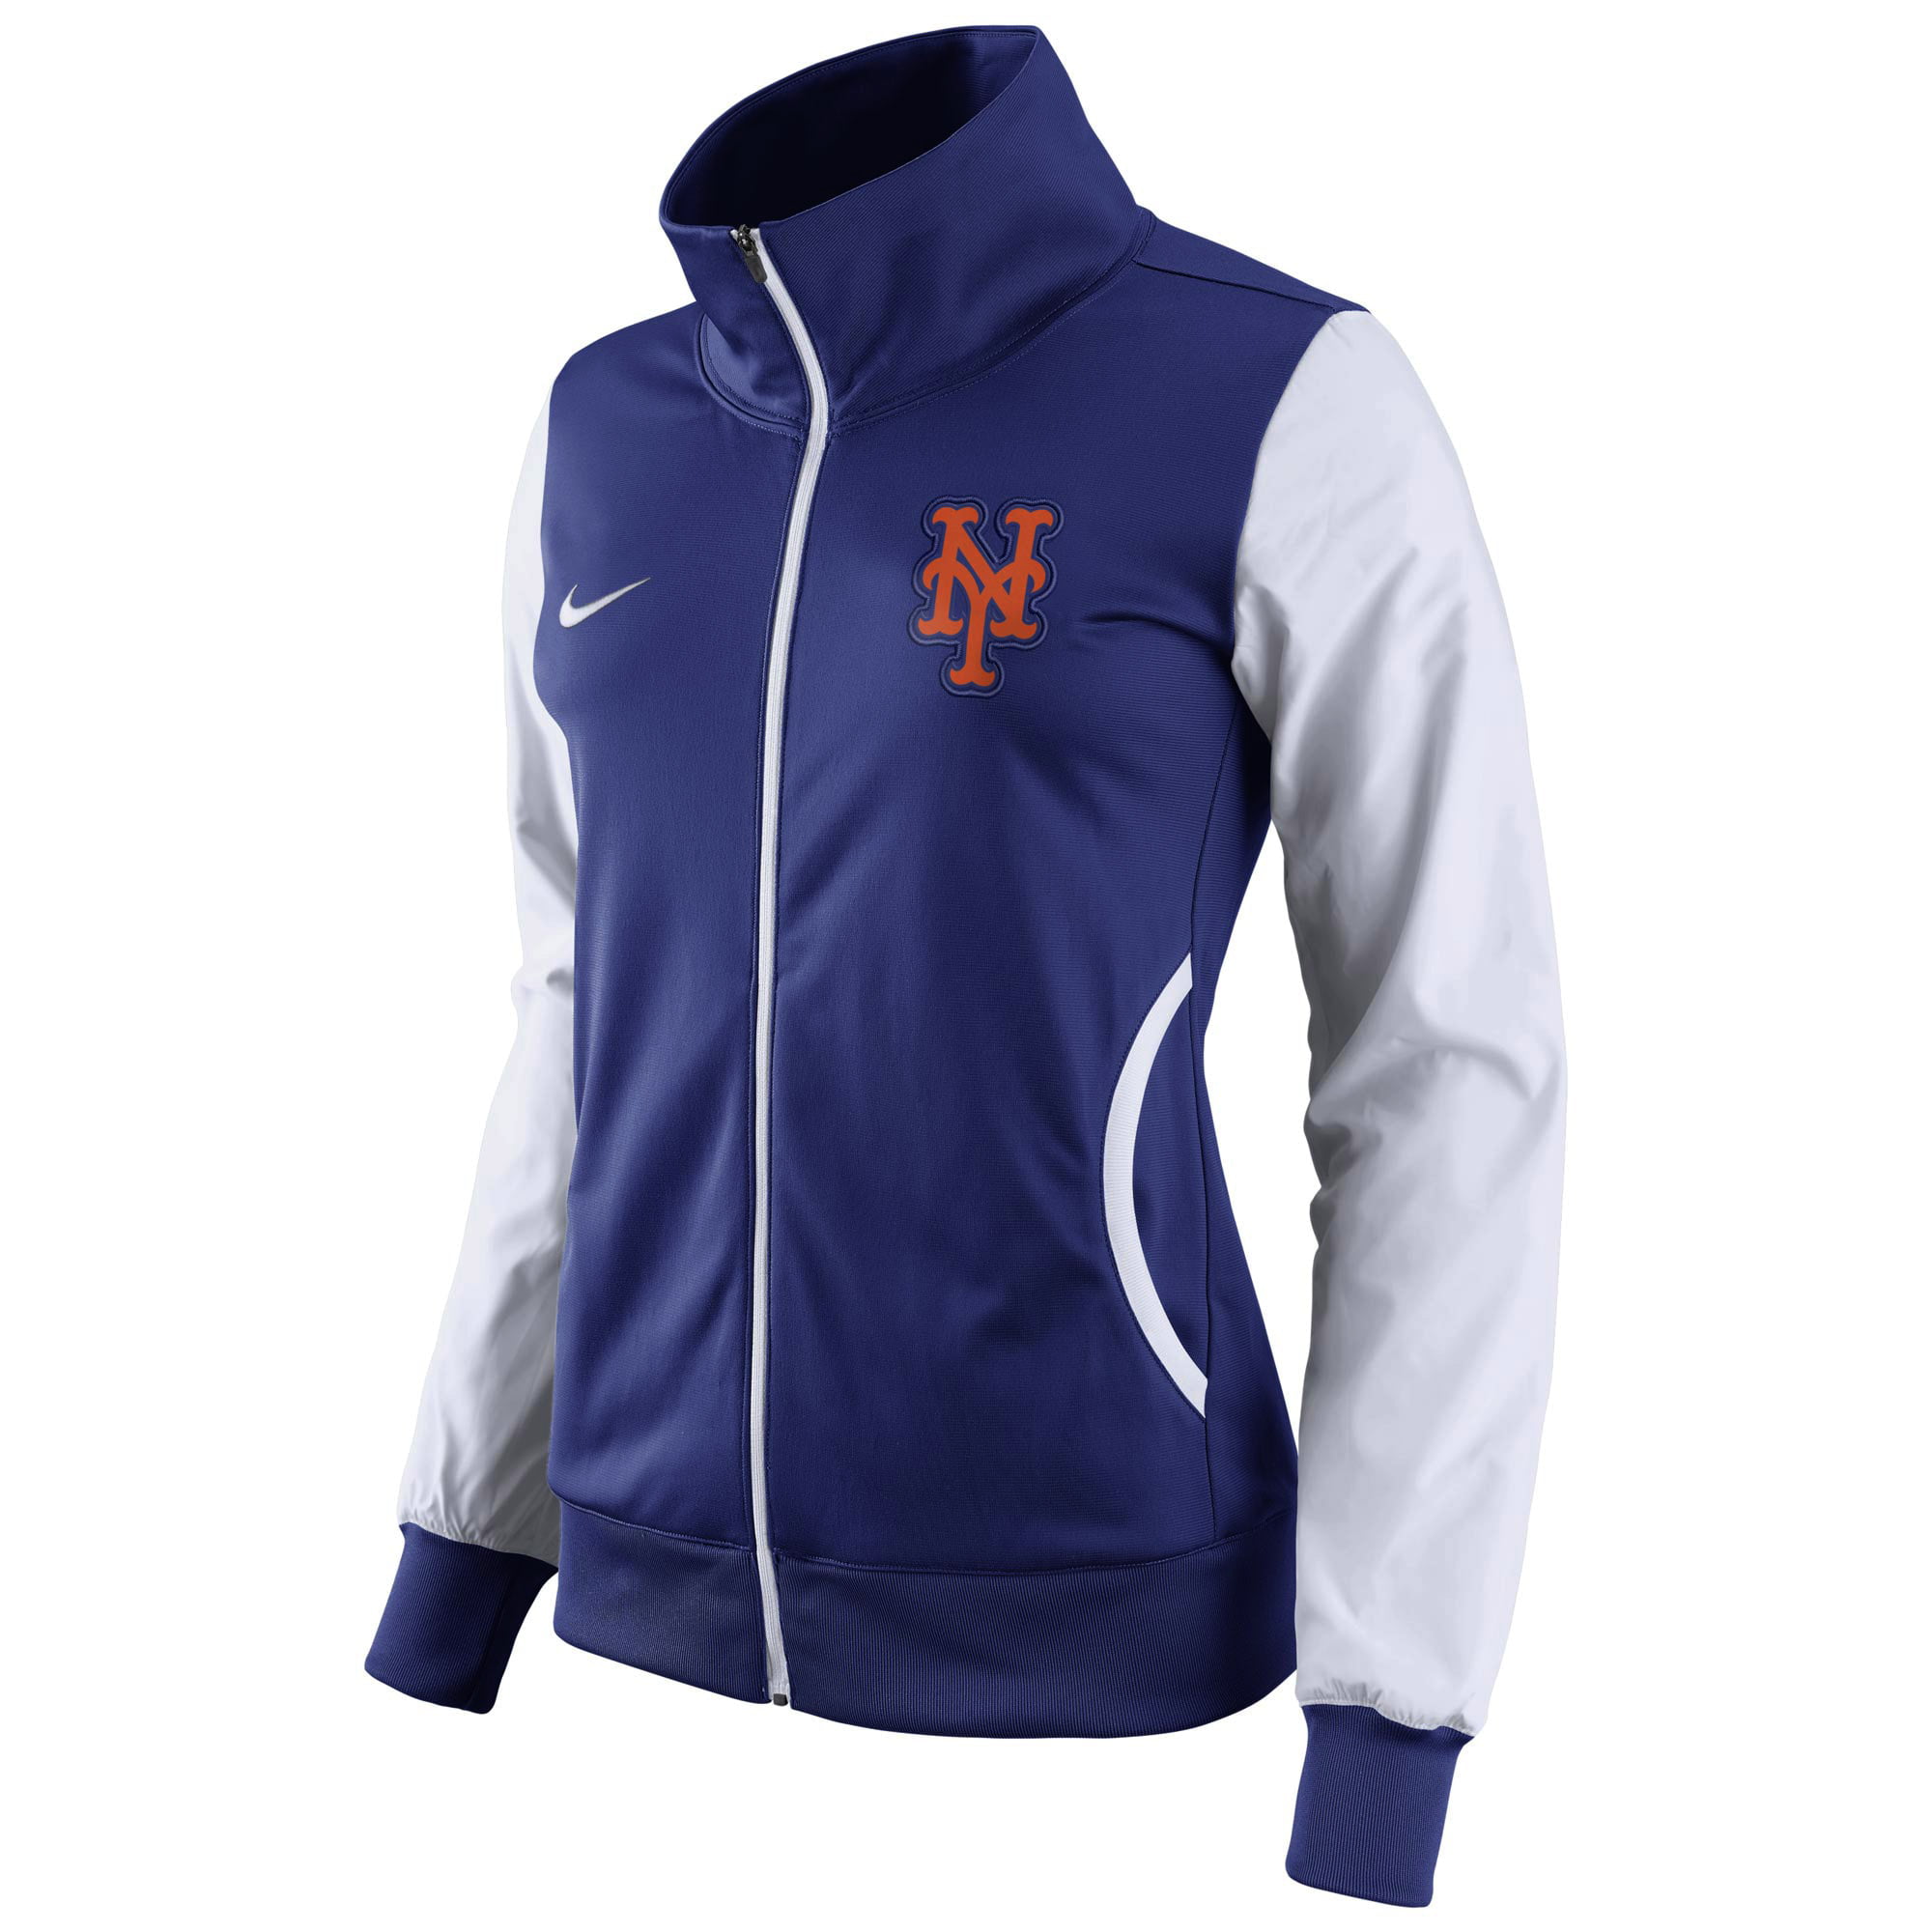 New York Mets Nike Women's Track Jacket - Royal/White - Walmart.com ...